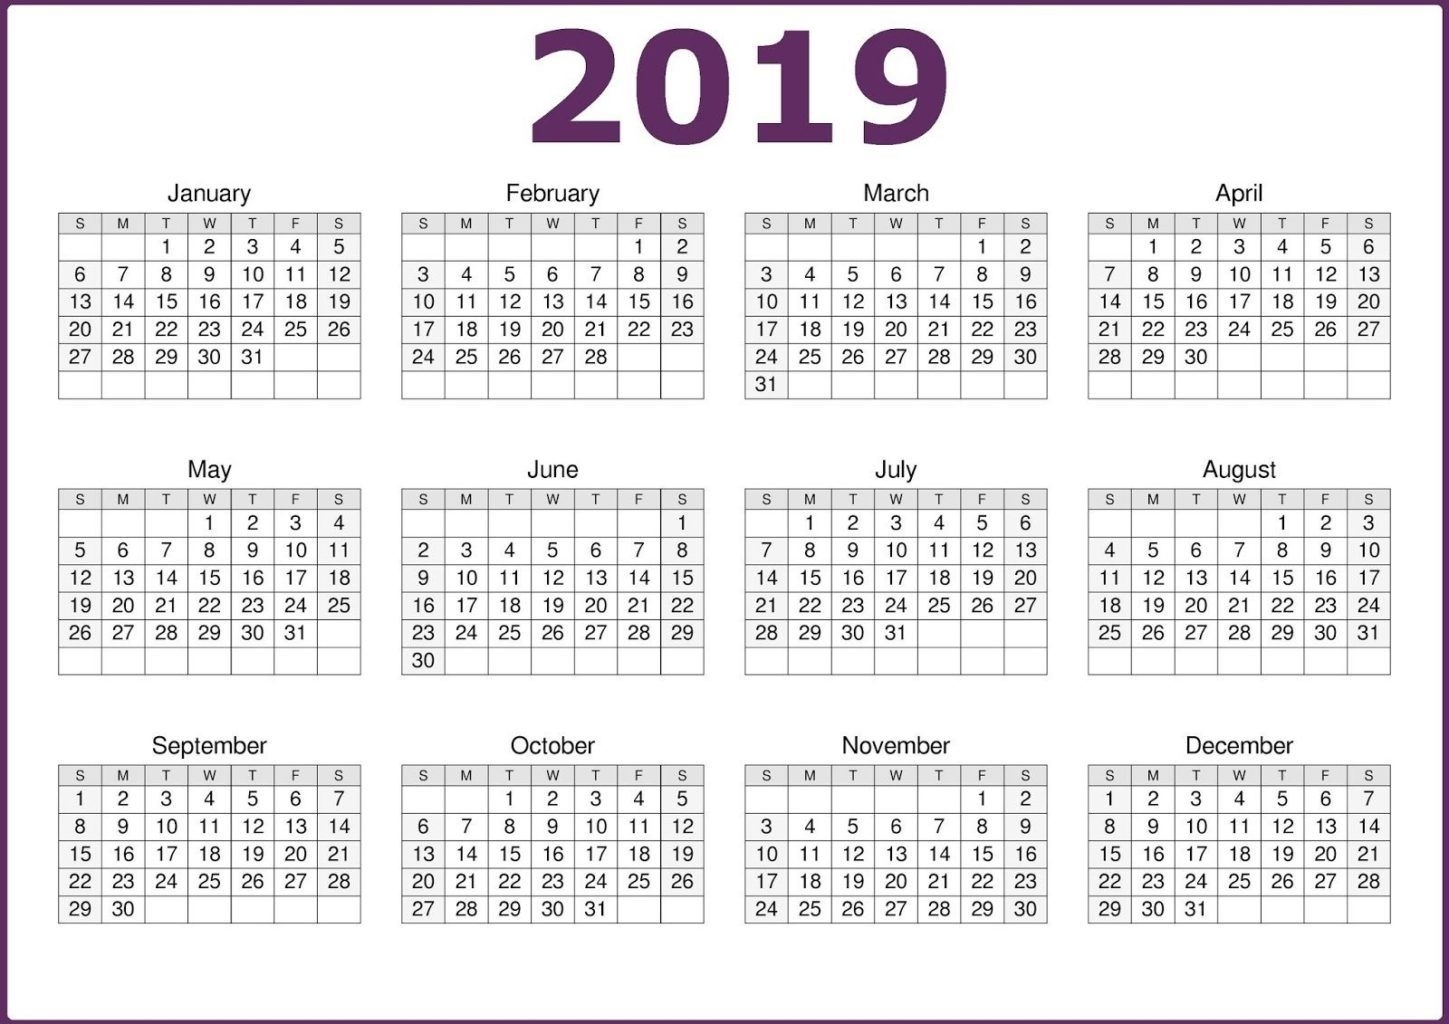 2019 One Page Calendar Printable | 2019 Calendars | 2019 Calendar 4 Calendar Months On One Page